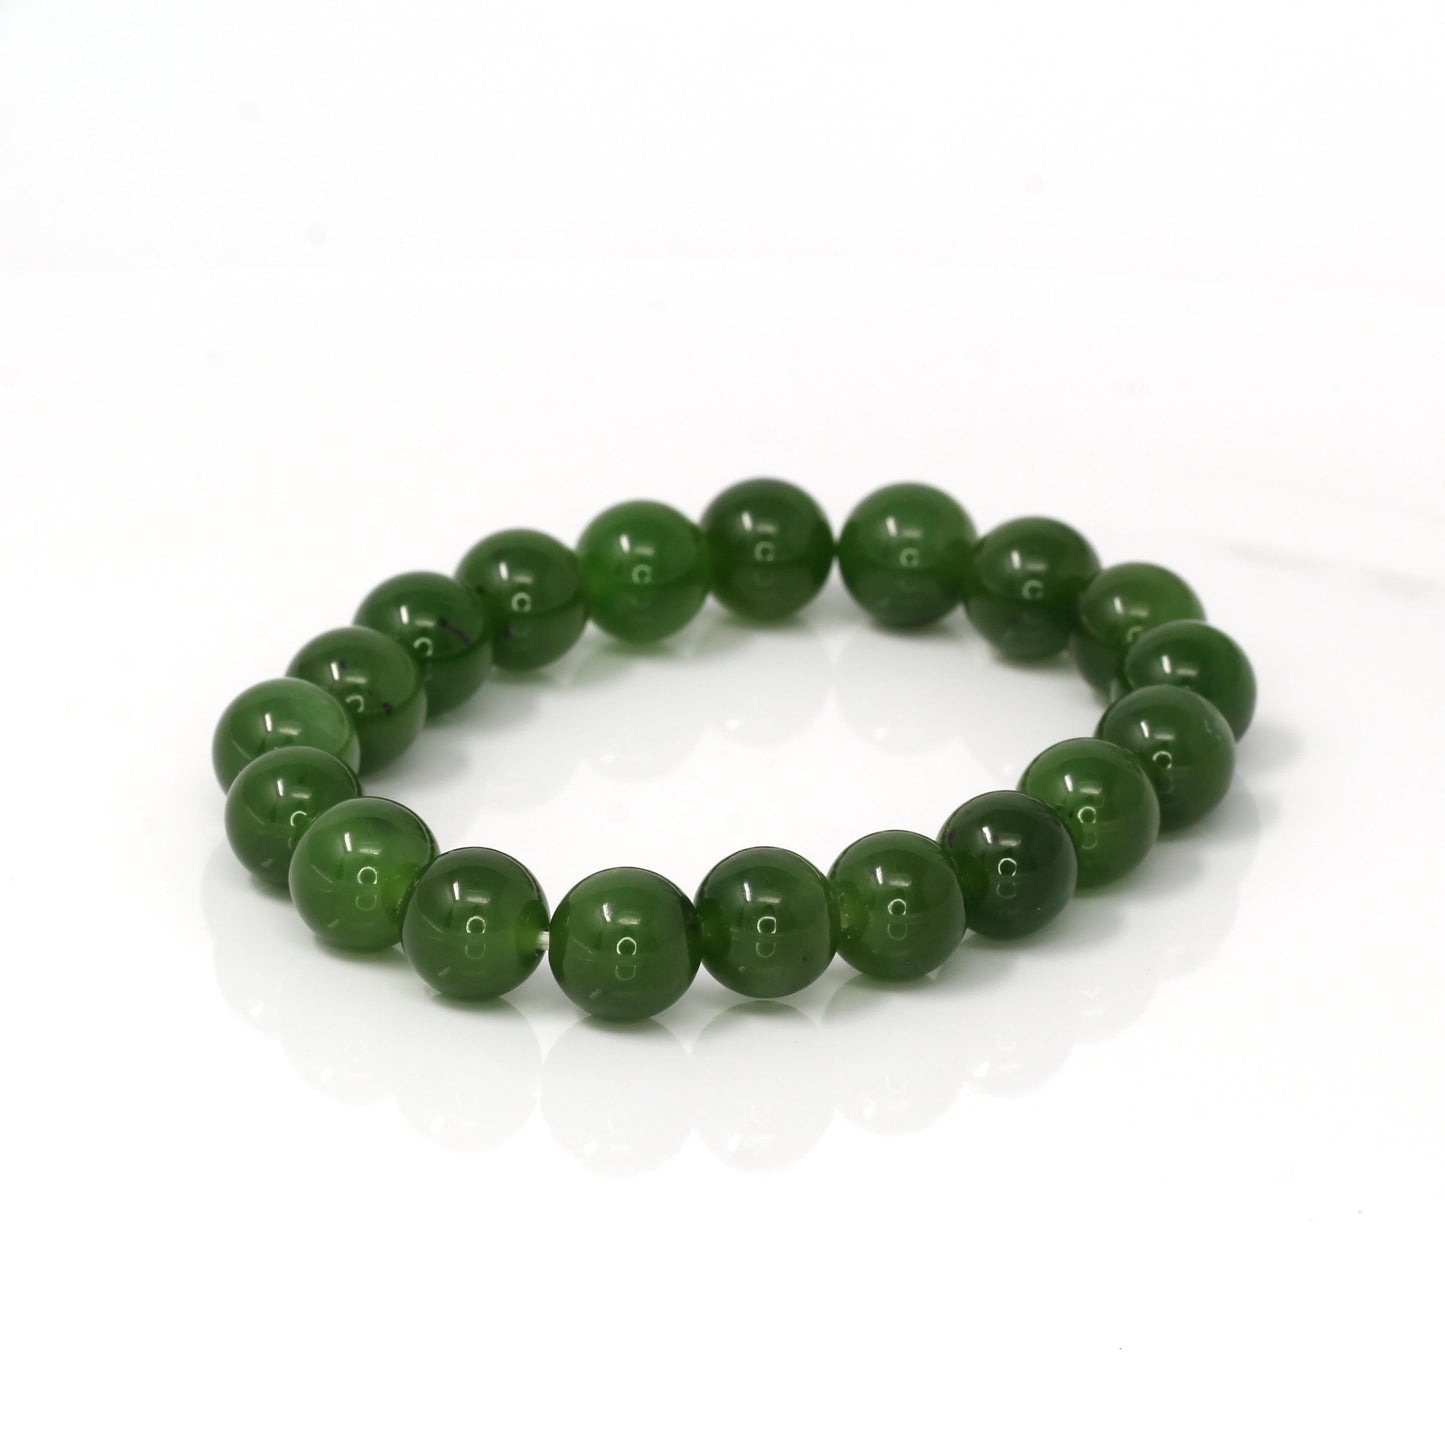 RealJade "Classic Bangle" Genuine Burmese High Quality Apple Green Jadeite Jade Bangle Bracelet (53.4mm) #543